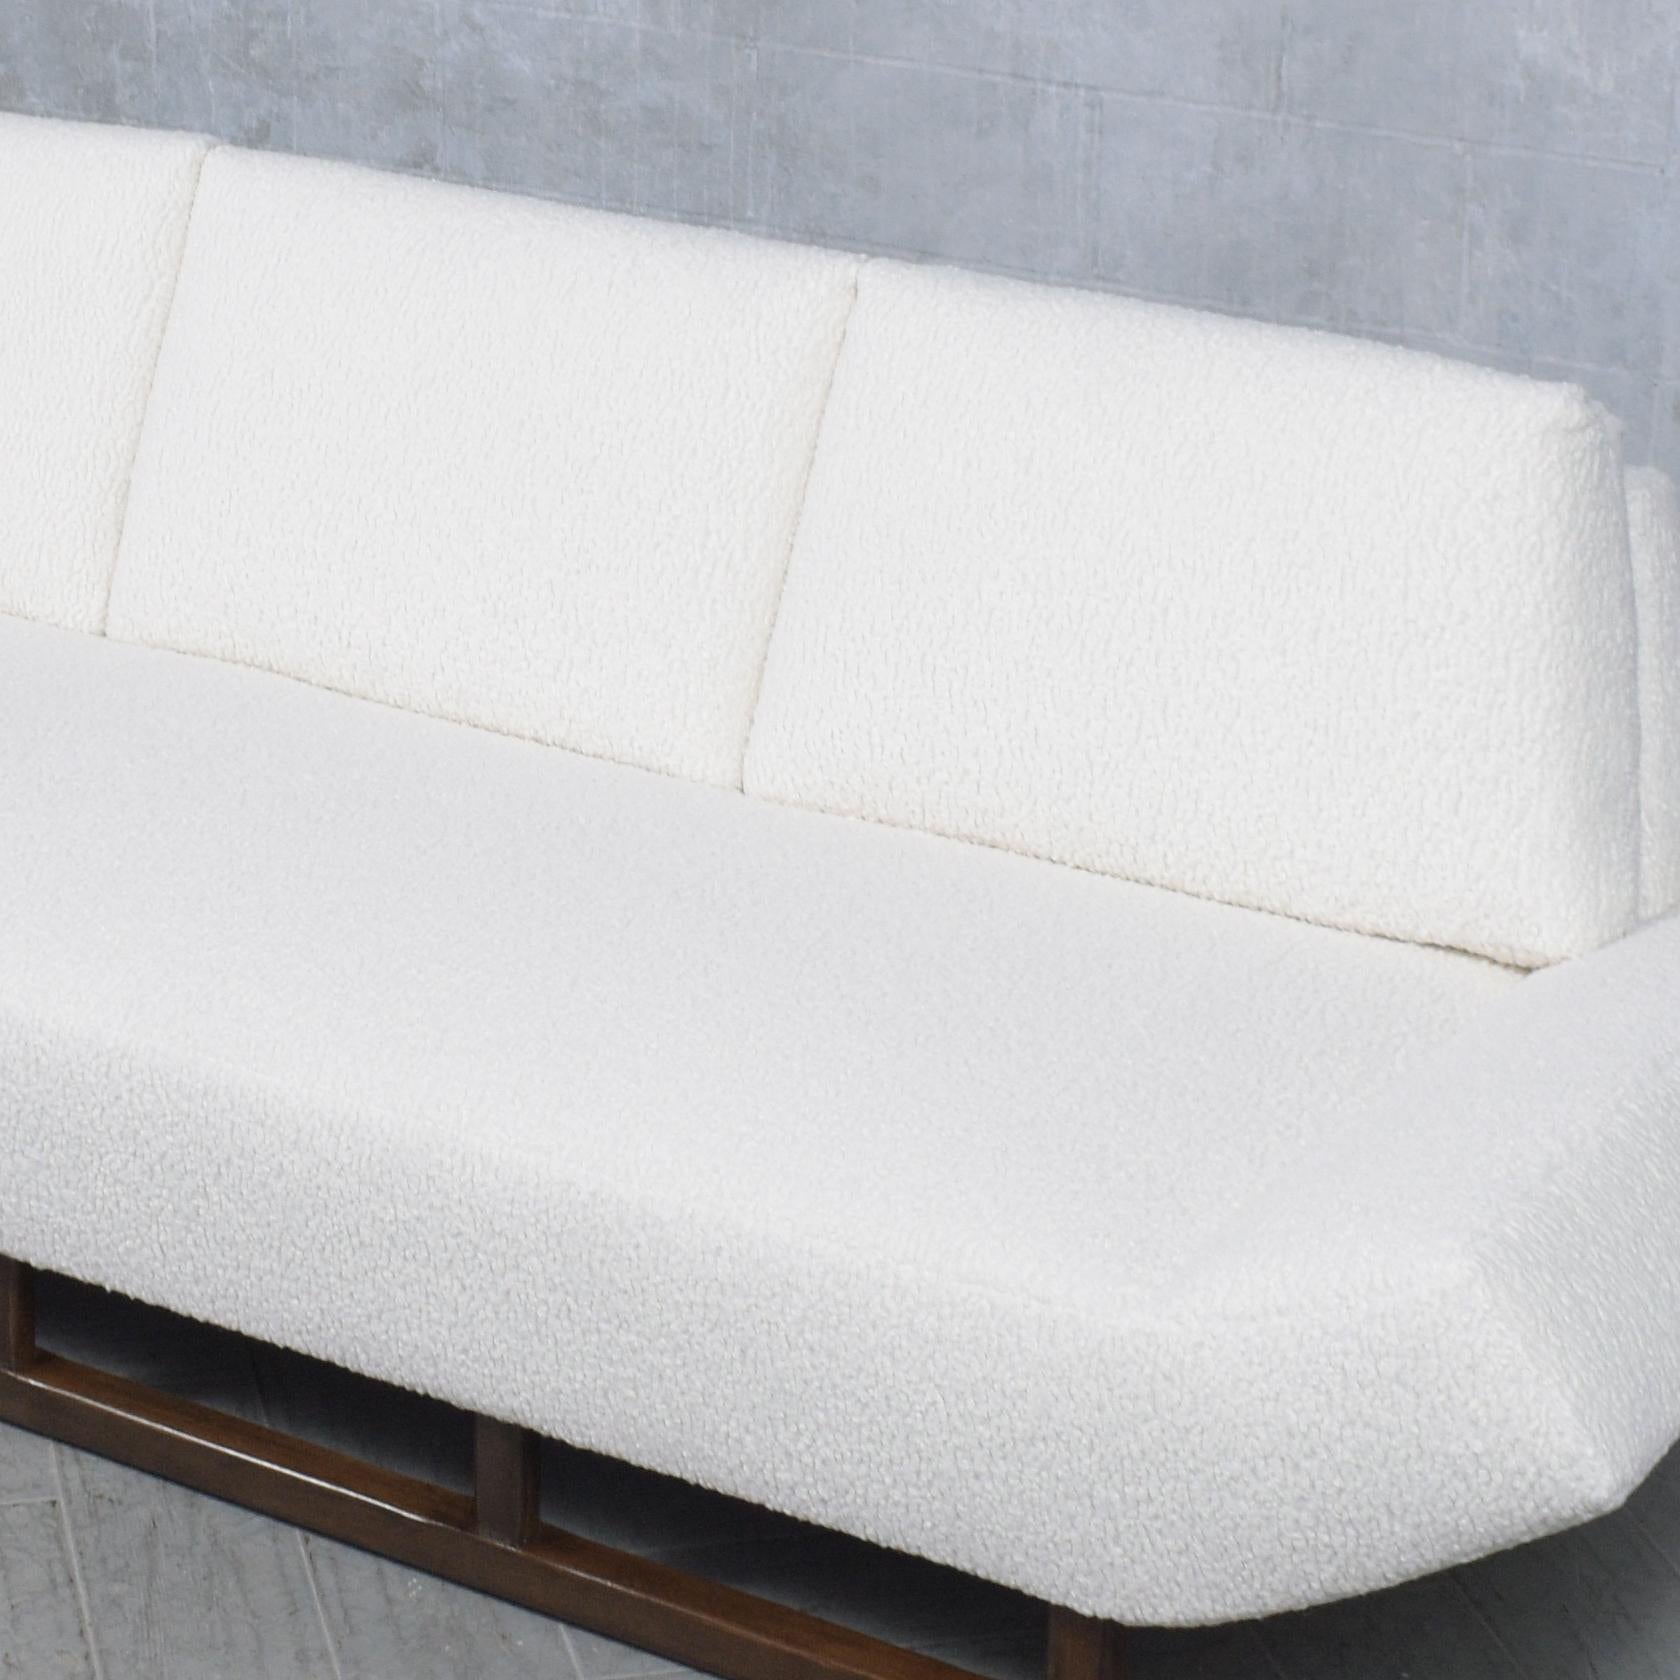 Foam Vintage Mid-Century Sofa Restored: Classic Design Meets Modern Comfort